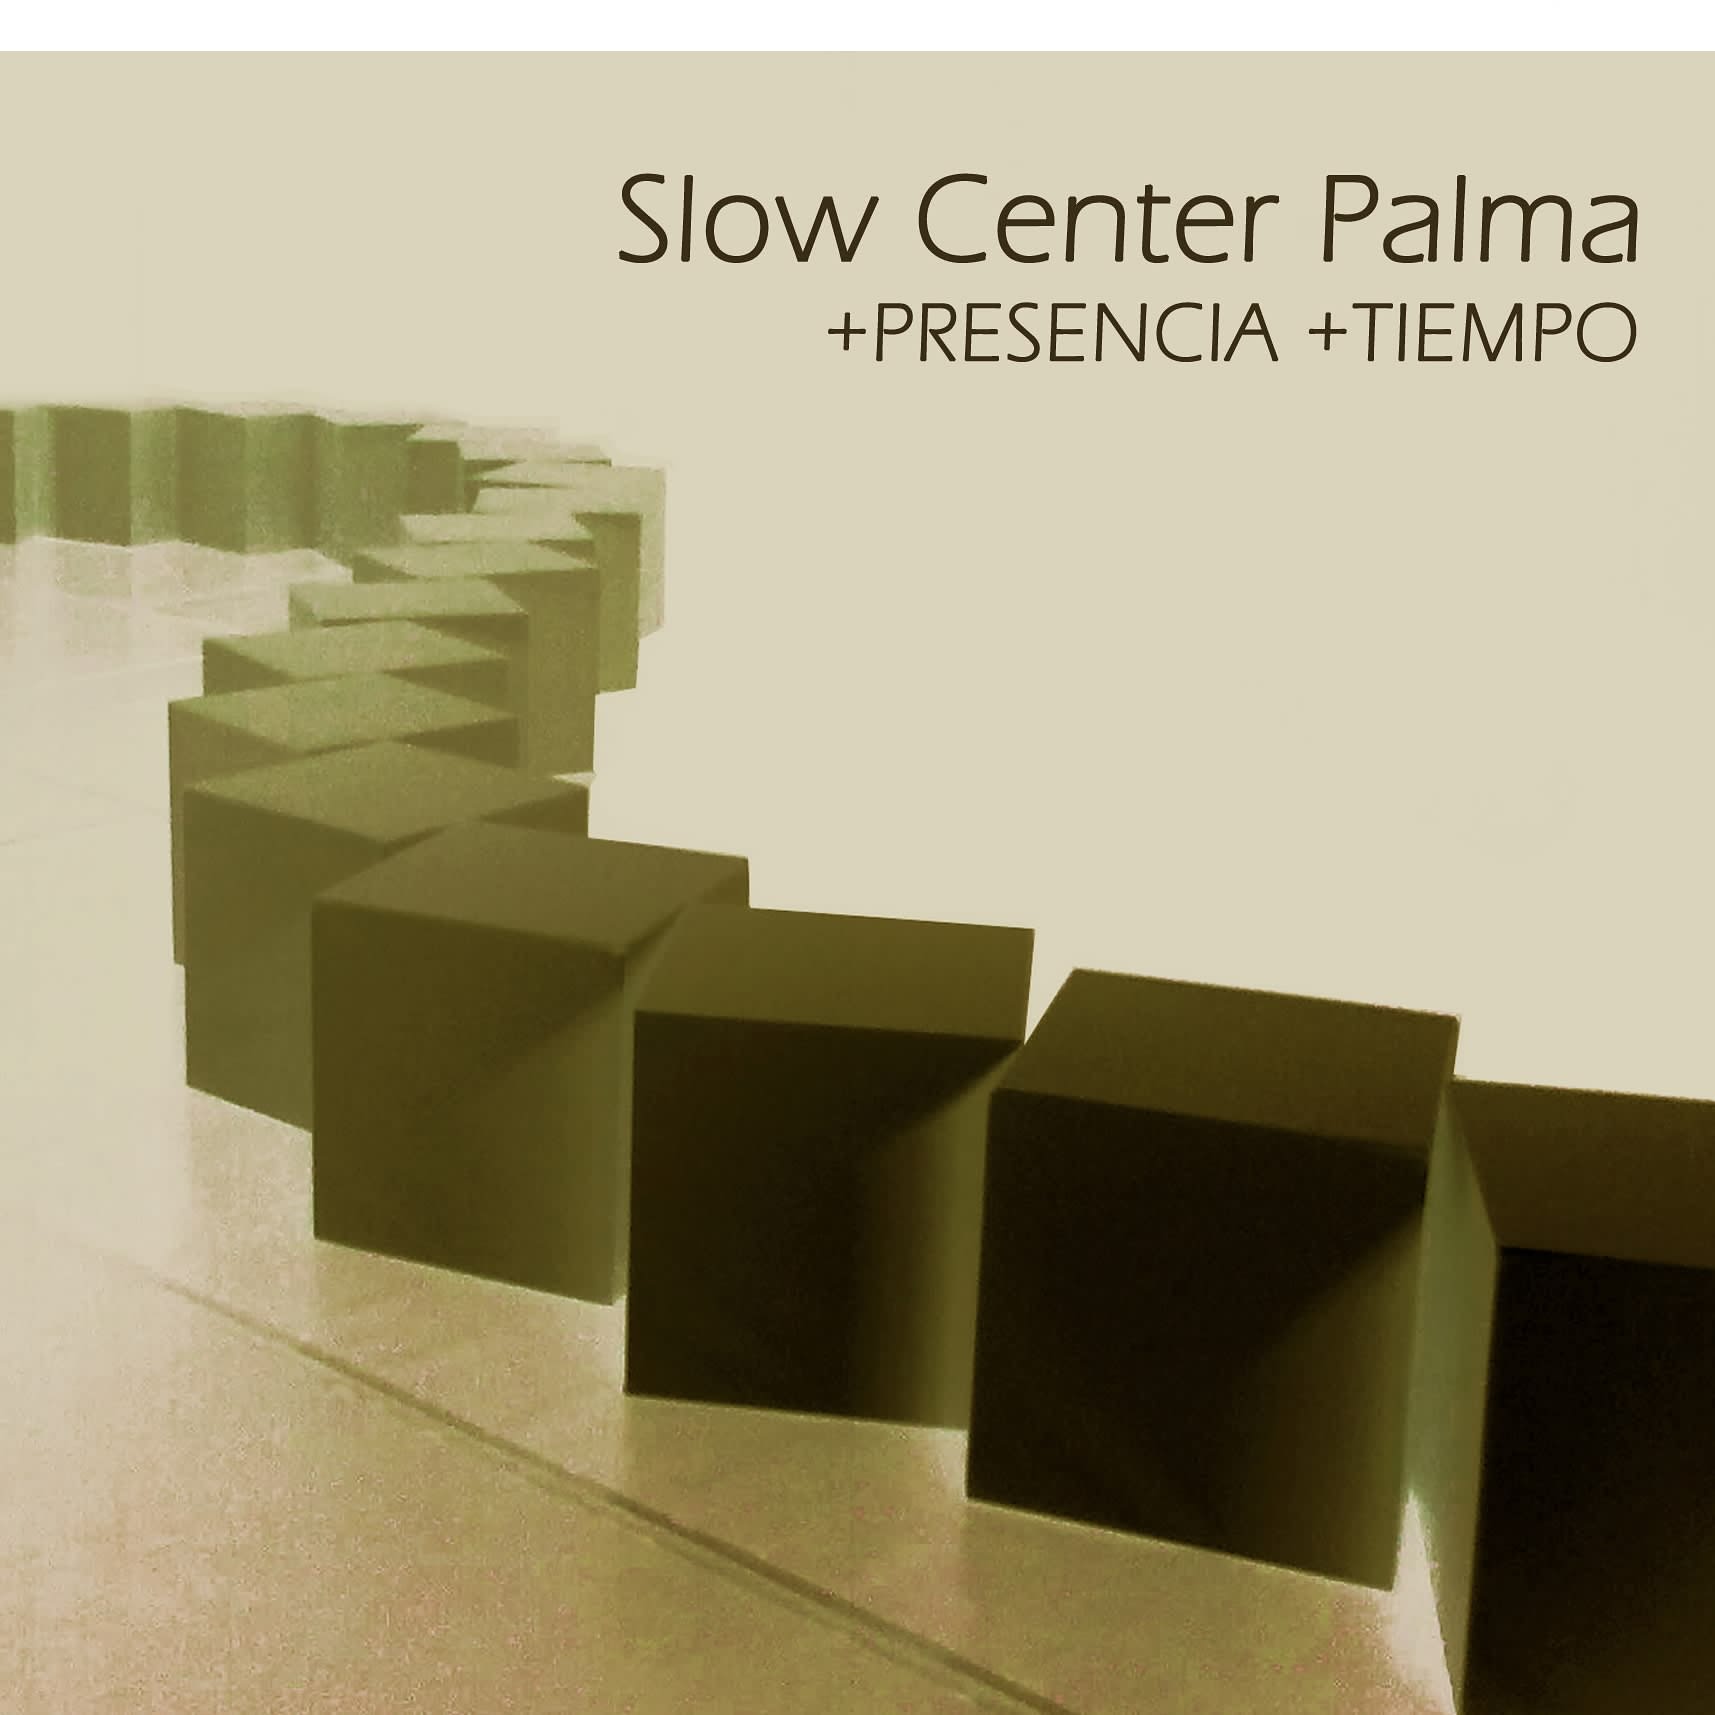 Slow Center Palma